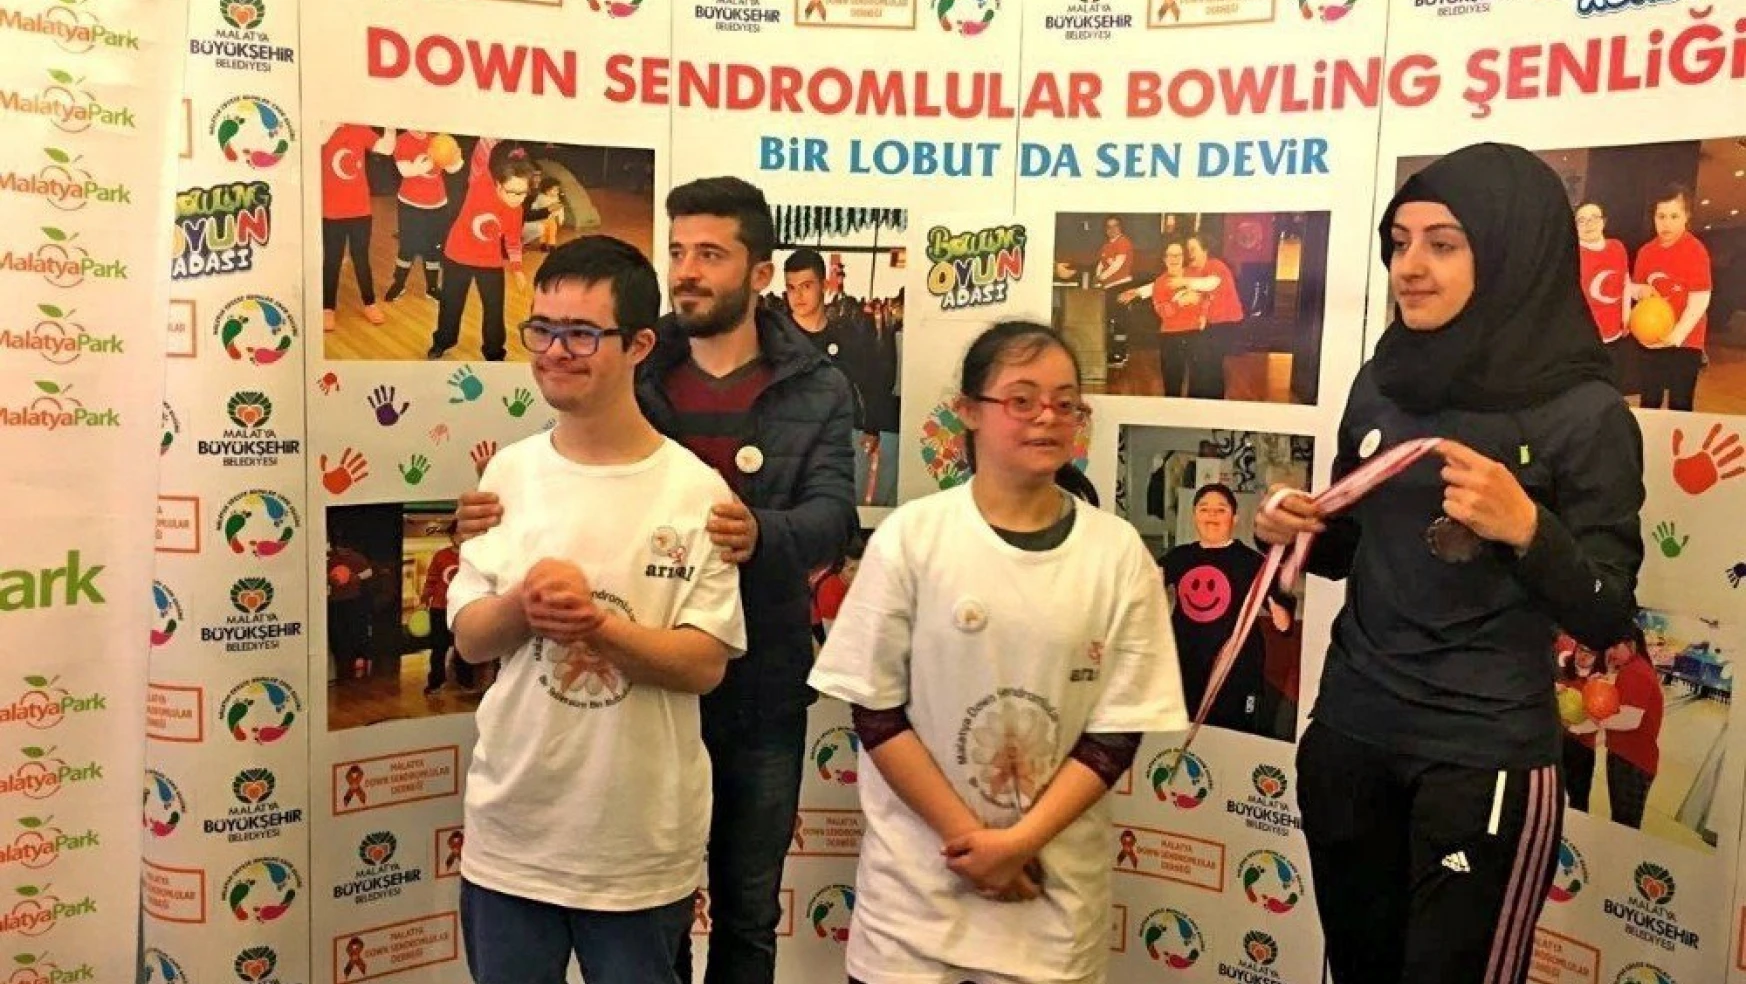 Down Sendormlular bowling şenliği